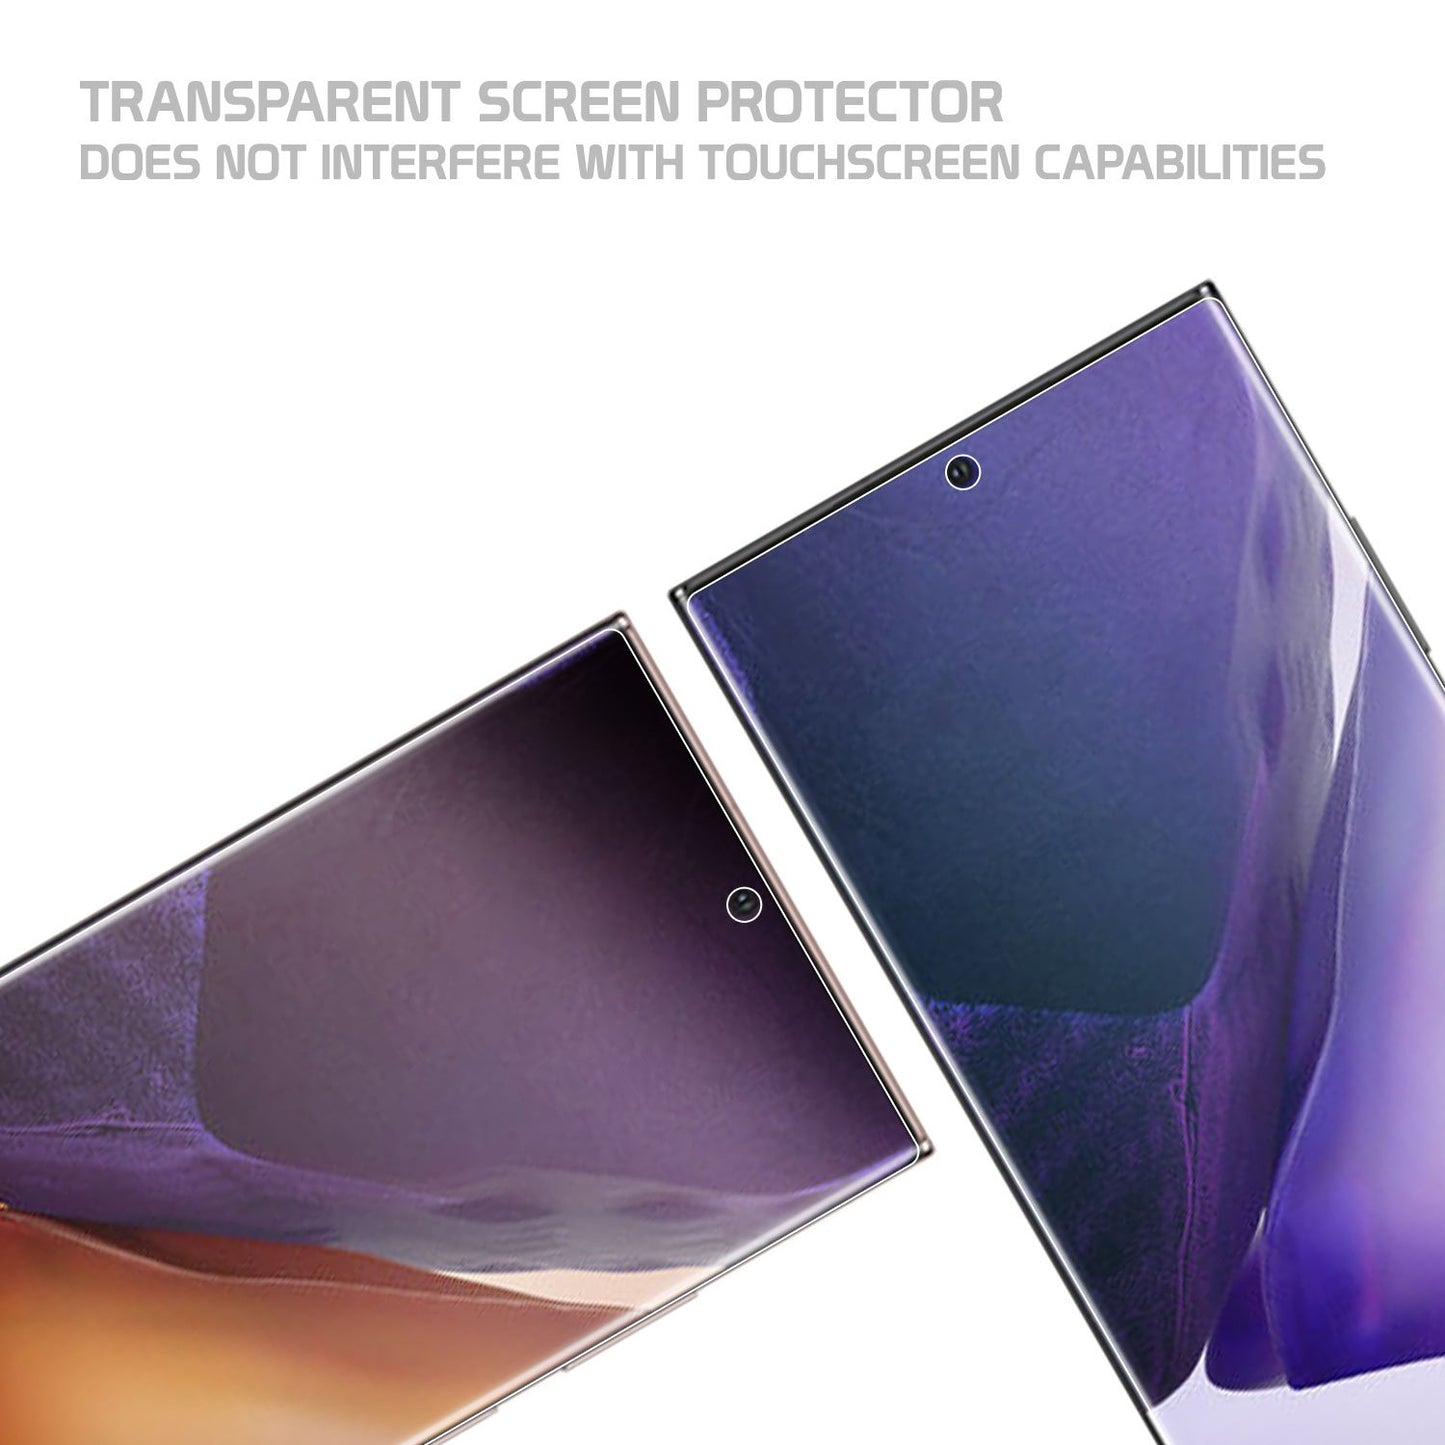 STSAMN20U - Cellet Samsung Galaxy Note 20 Ultra Screen Protector, Full Coverage Flexible Film Screen Protector for Samsung Galaxy Note 20 Ultra